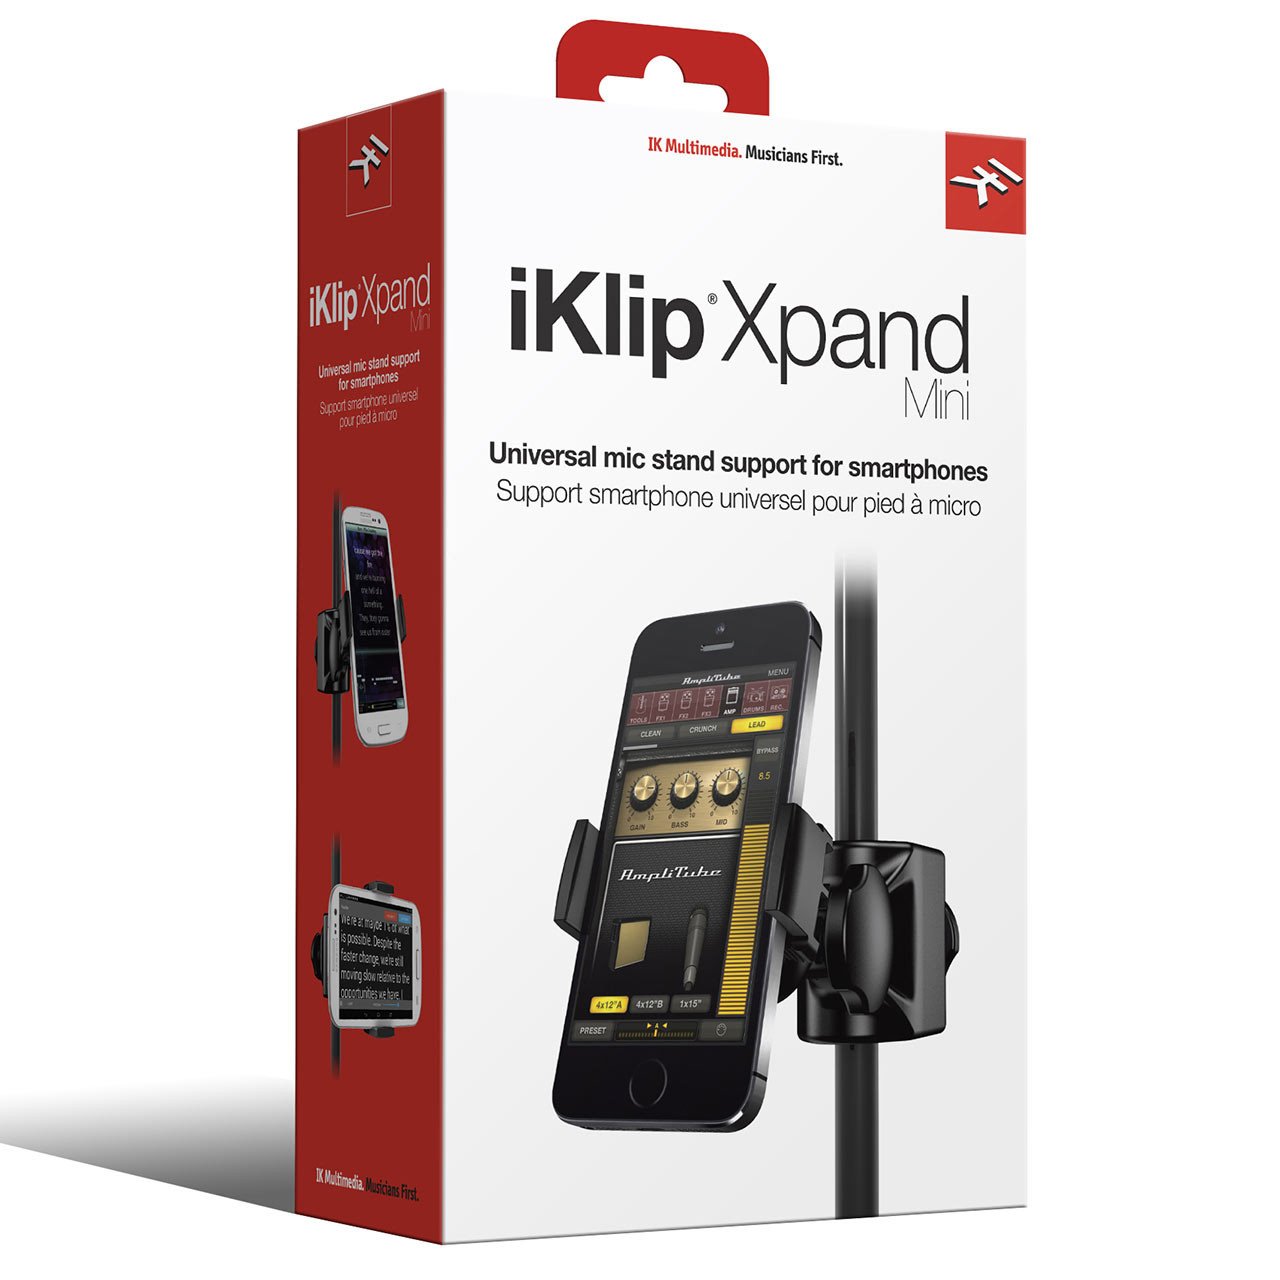 Microphone Accessories - IK Multimedia IKlip Xpand Mini - Universal Mic Stand Support